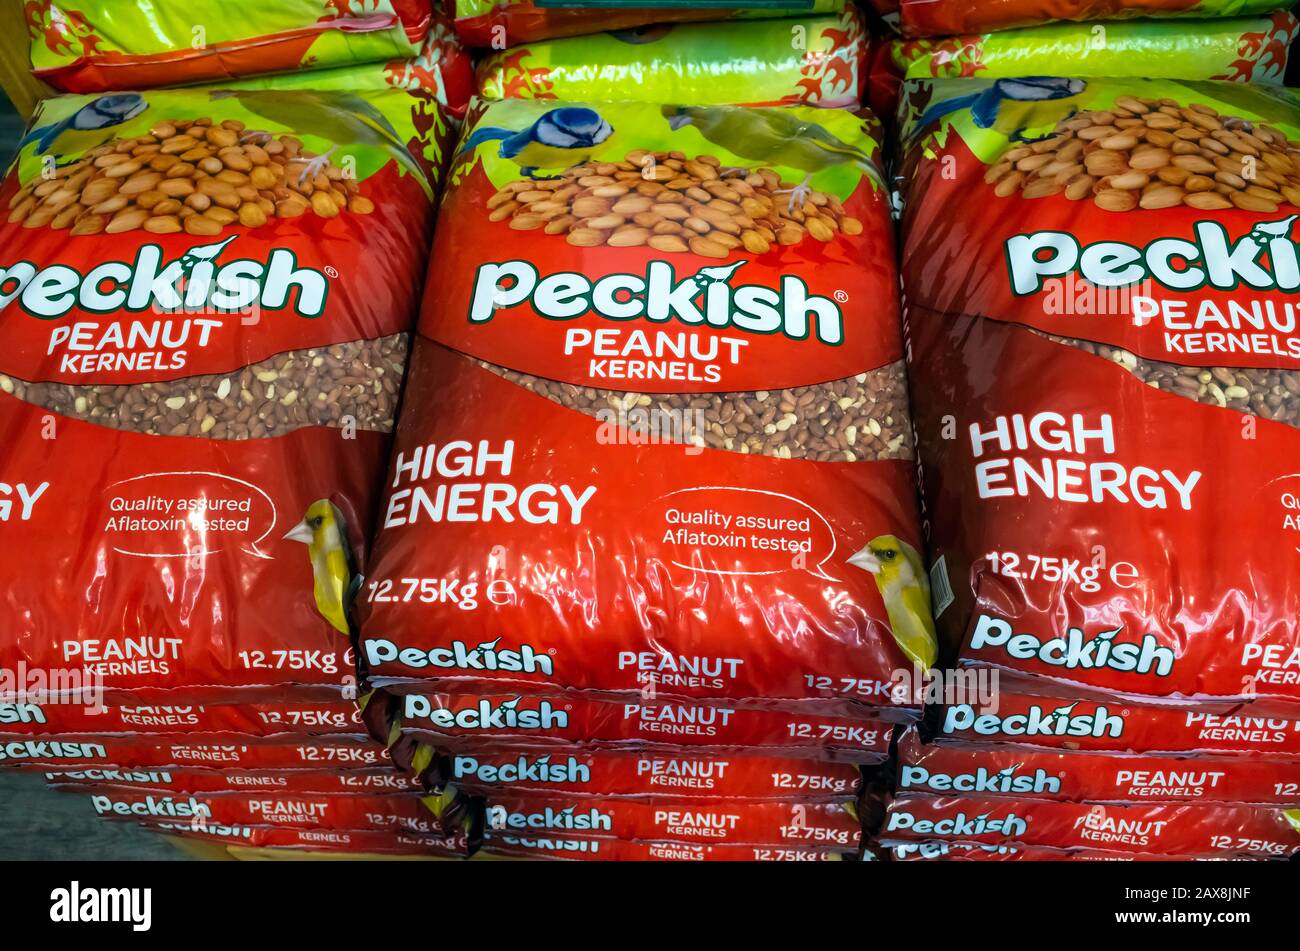 Peckish brand bulk peanuts for sale in a garden centre for feeding wild birds Stock Photo